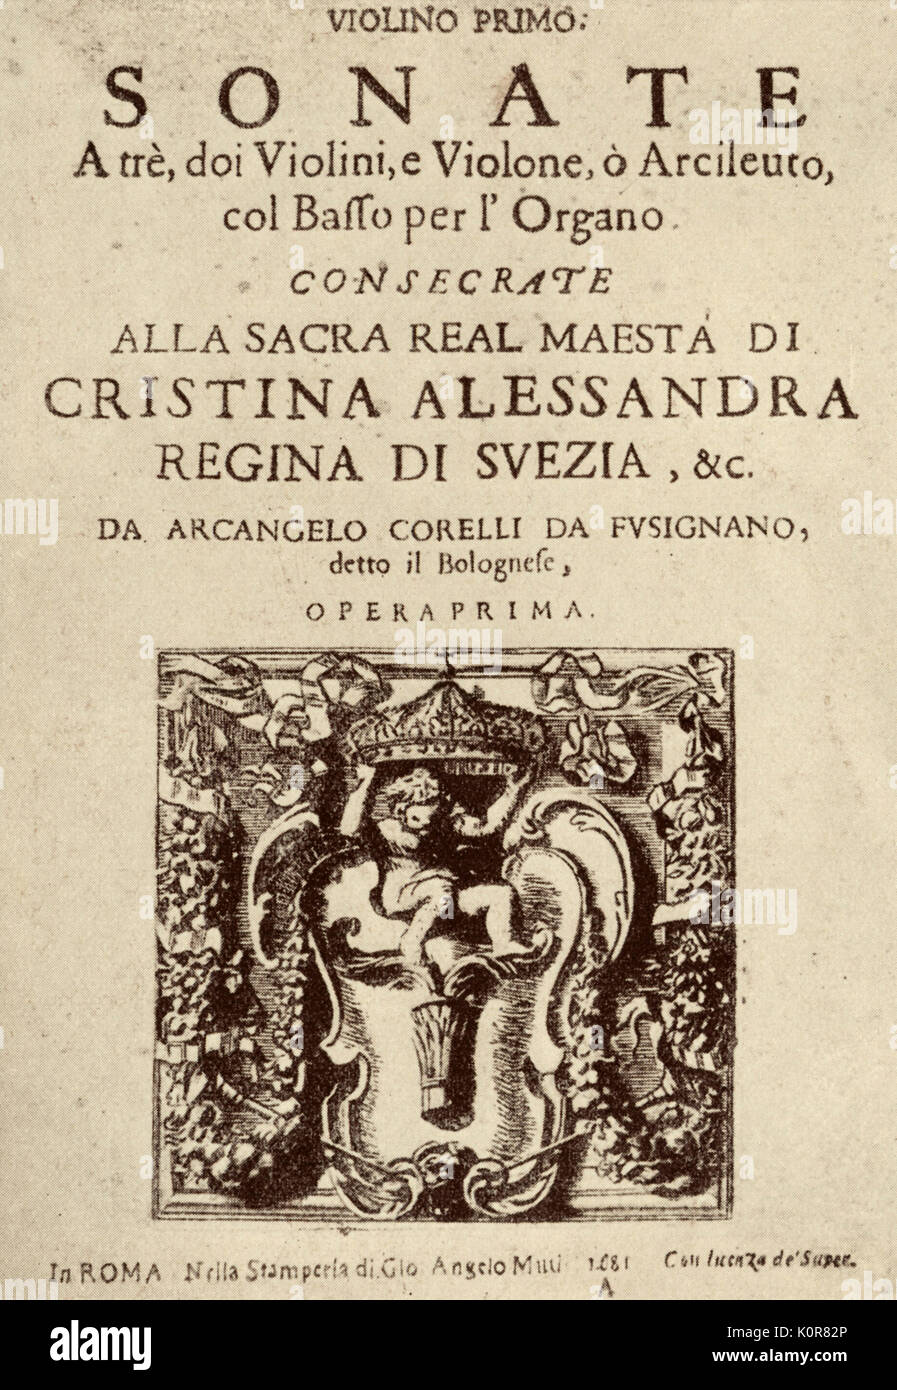 CORELLI, Arcangelo - Sonate A tre (op.1). Italian violinist and composer, 1653-1713. P. Mascardi, Rome 1685. Stock Photo